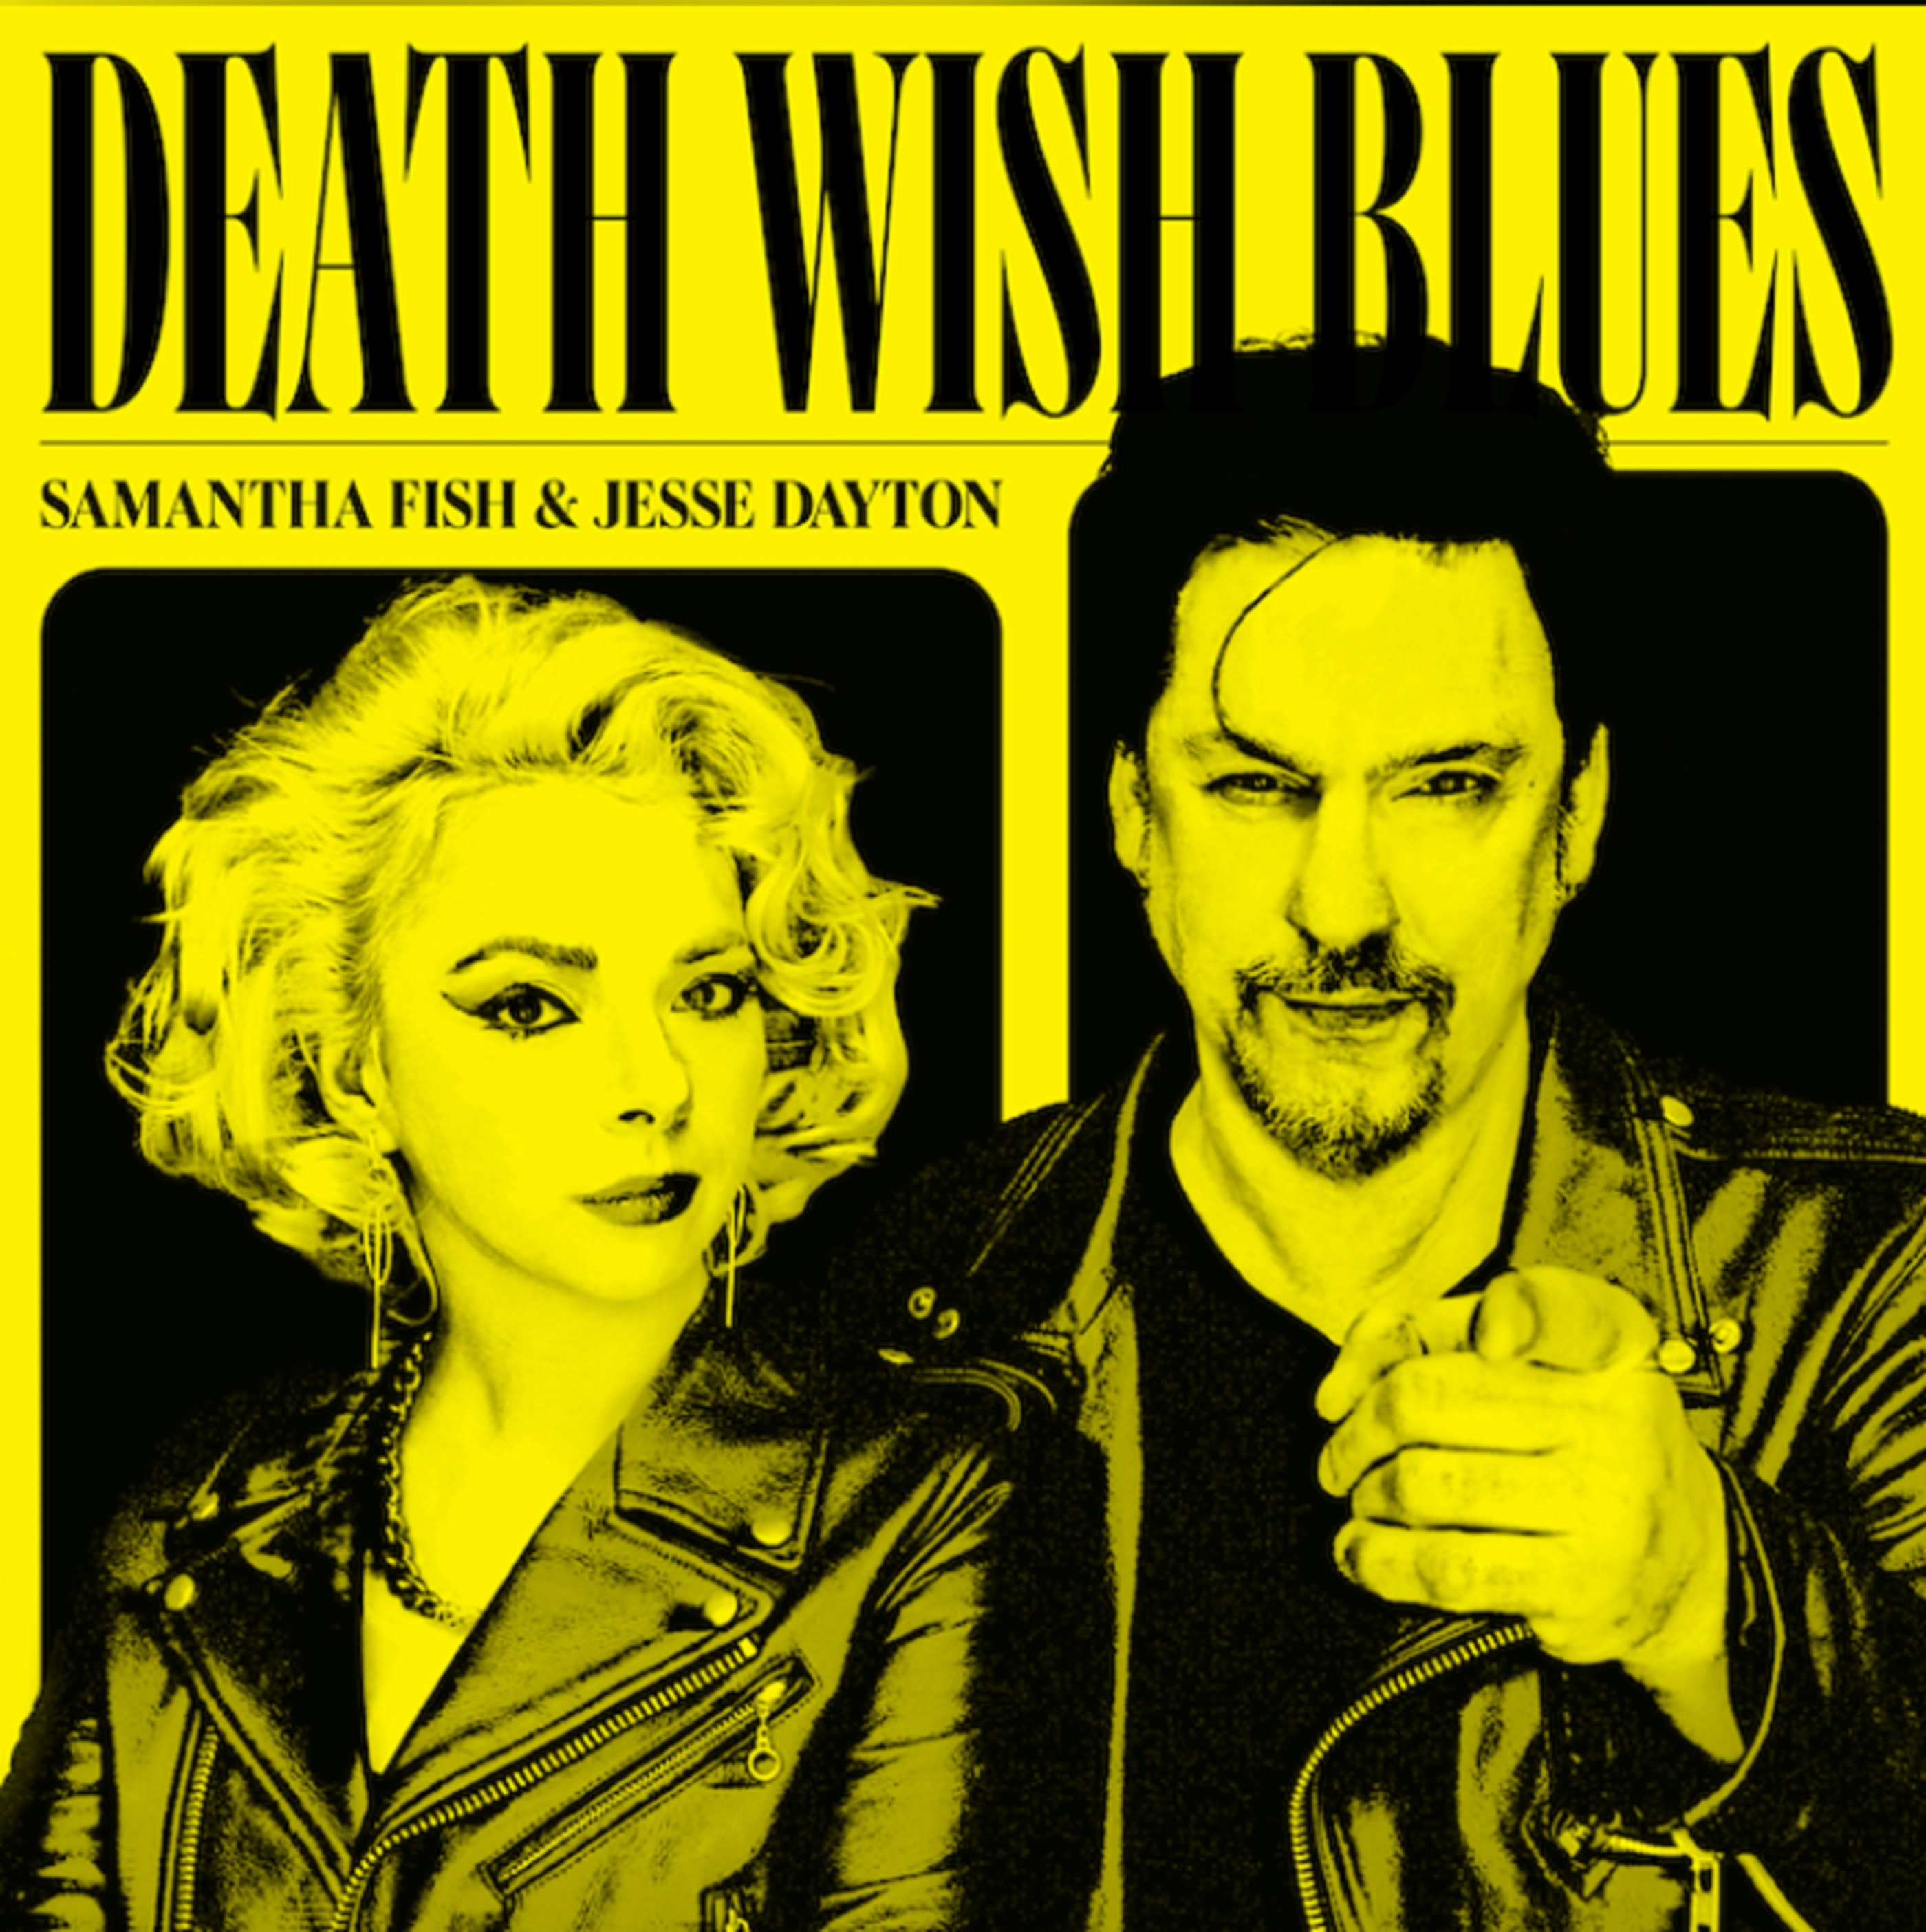  Samantha Fish & Jesse Dayton Announce DEATH WISH BLUES (out MAY 19)